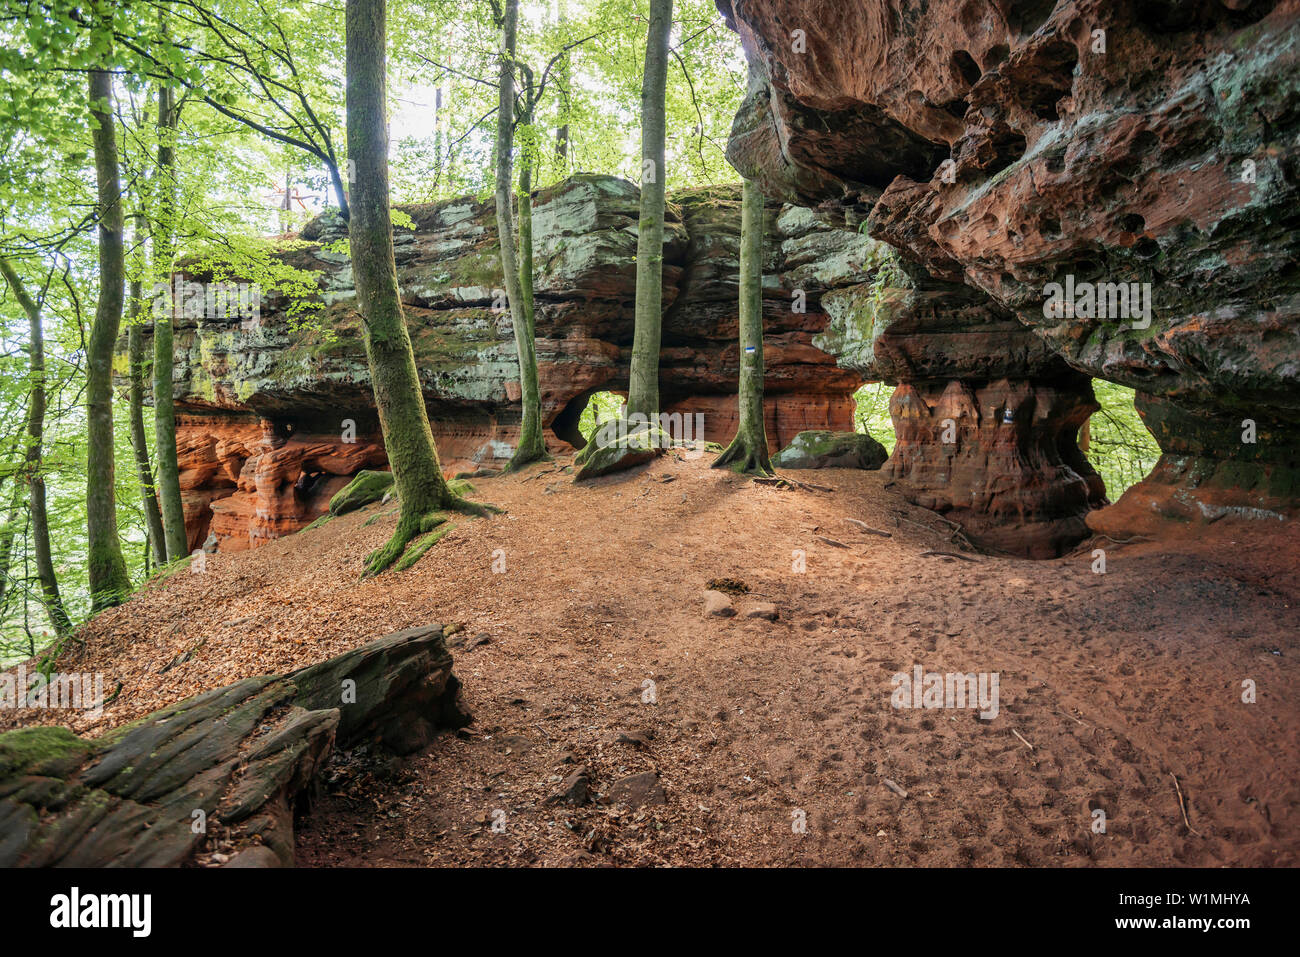 Altschlossfelsen, monumento naturale, Foresta del Palatinato, Eppenbrunn, Renania-Palatinato, Germania Foto Stock